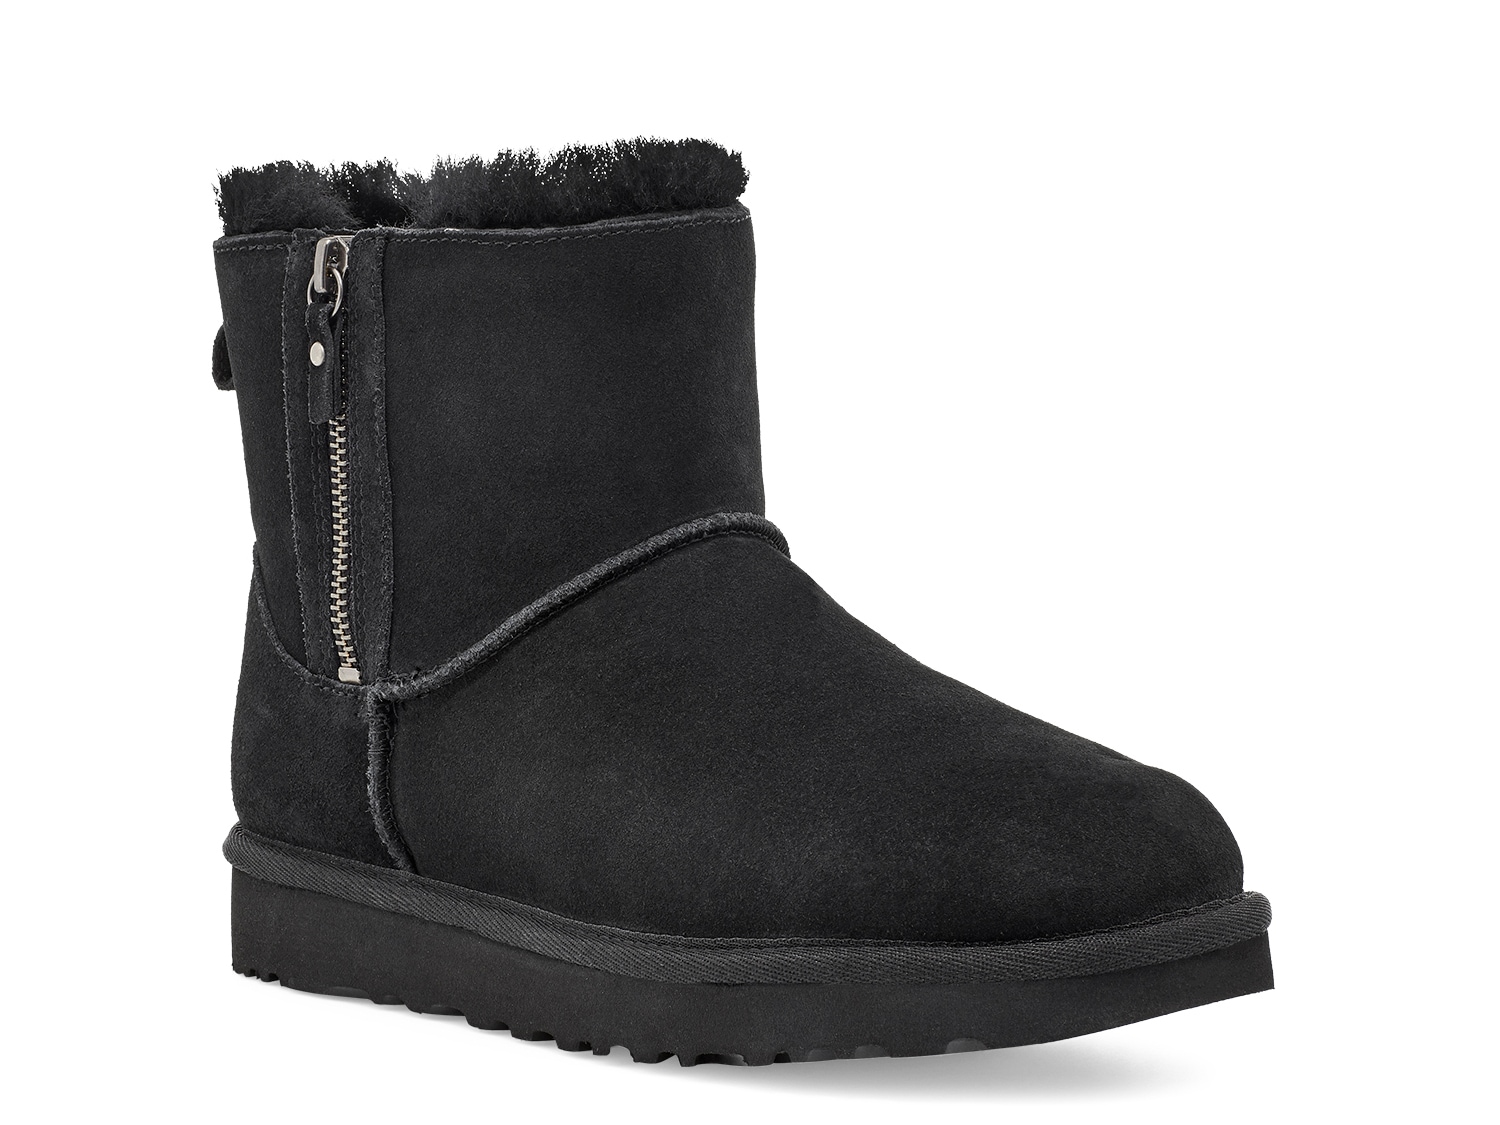 black ugg boots size 9